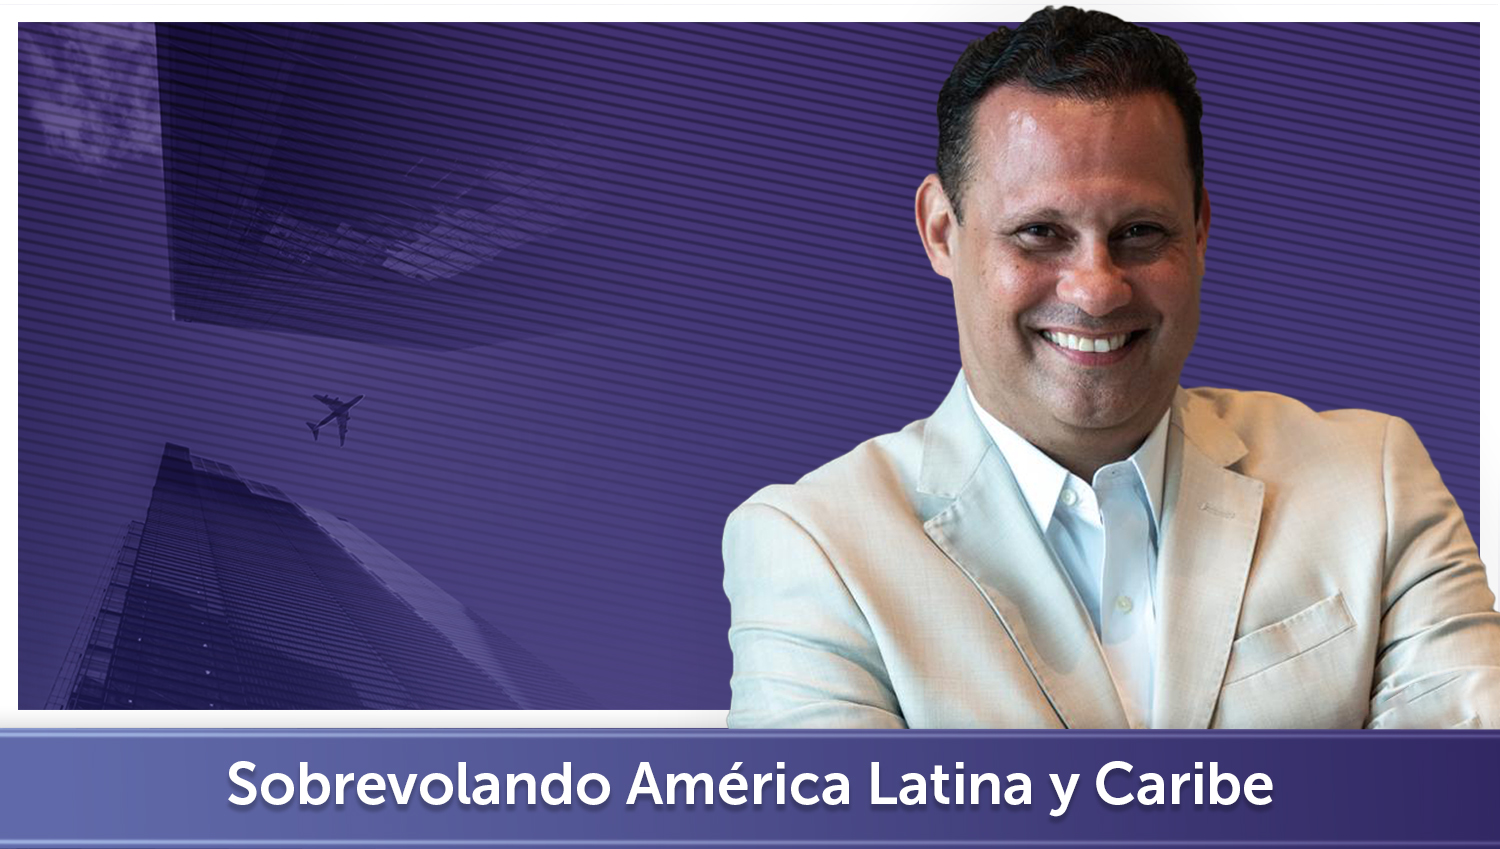 ALTA NEWS - Sobrevoando a América Latina e Caribe